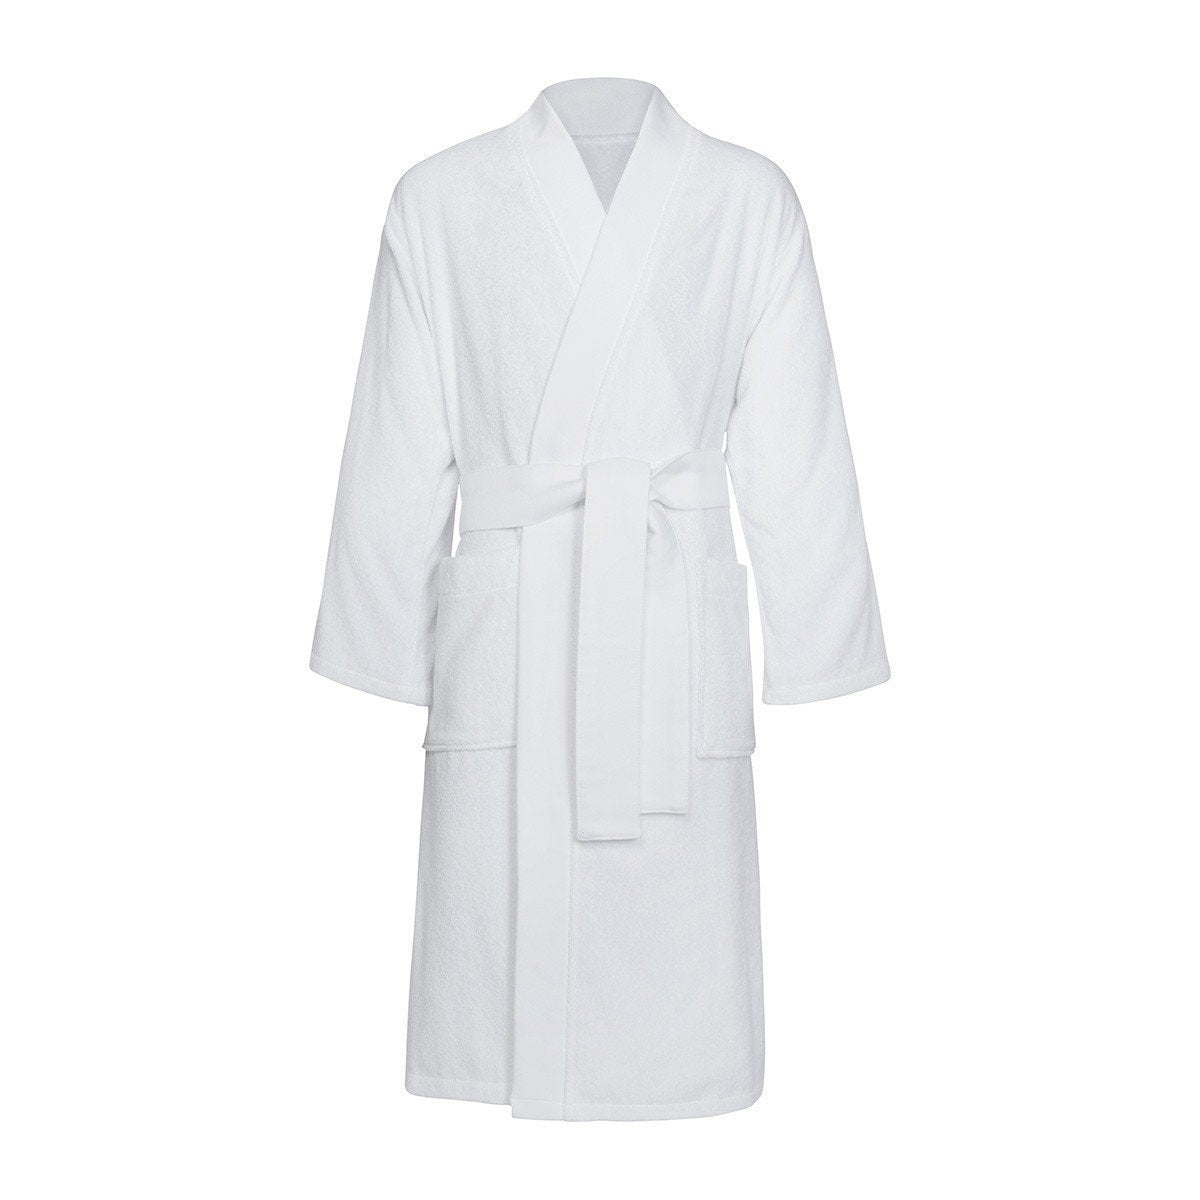 Iconic White Kimono Bath Robe by Kenzo | Fig Linens - FIG LINENS AND HOME